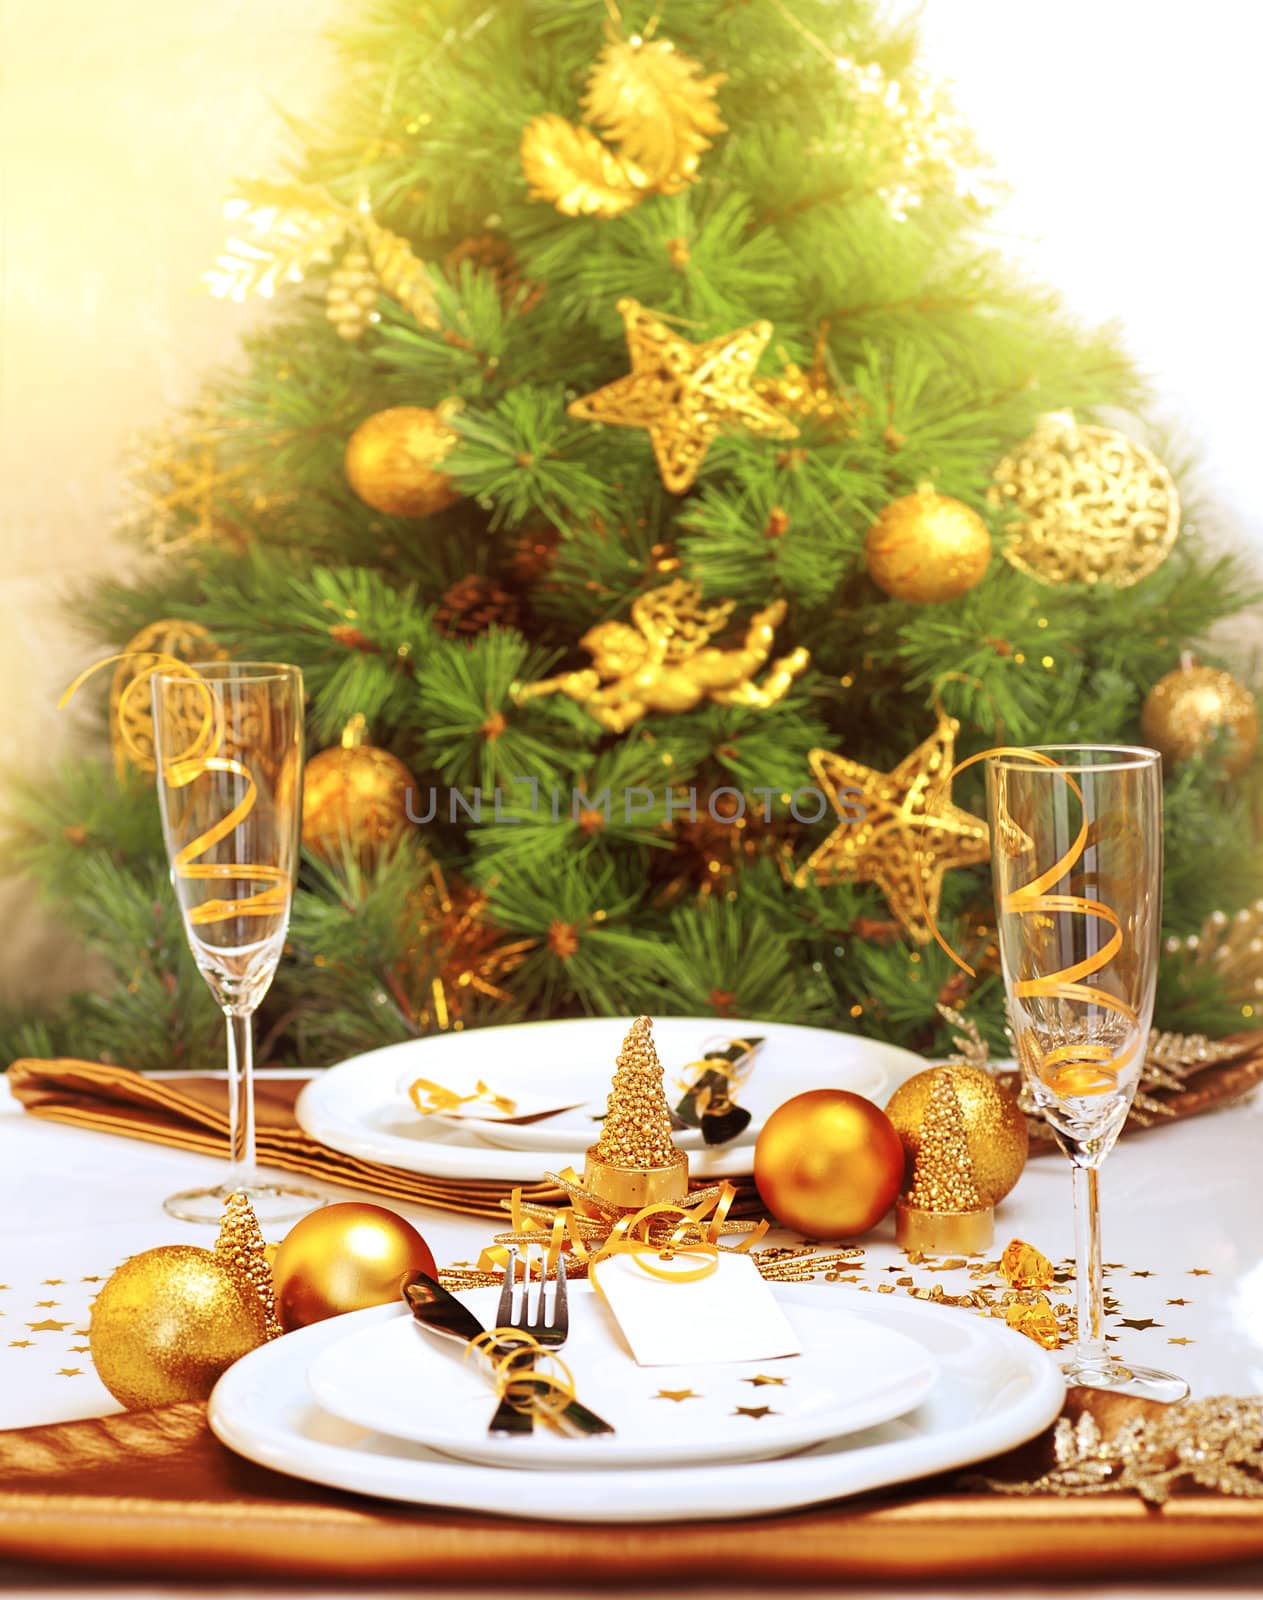 Romantic Christmastime dinner by Anna_Omelchenko